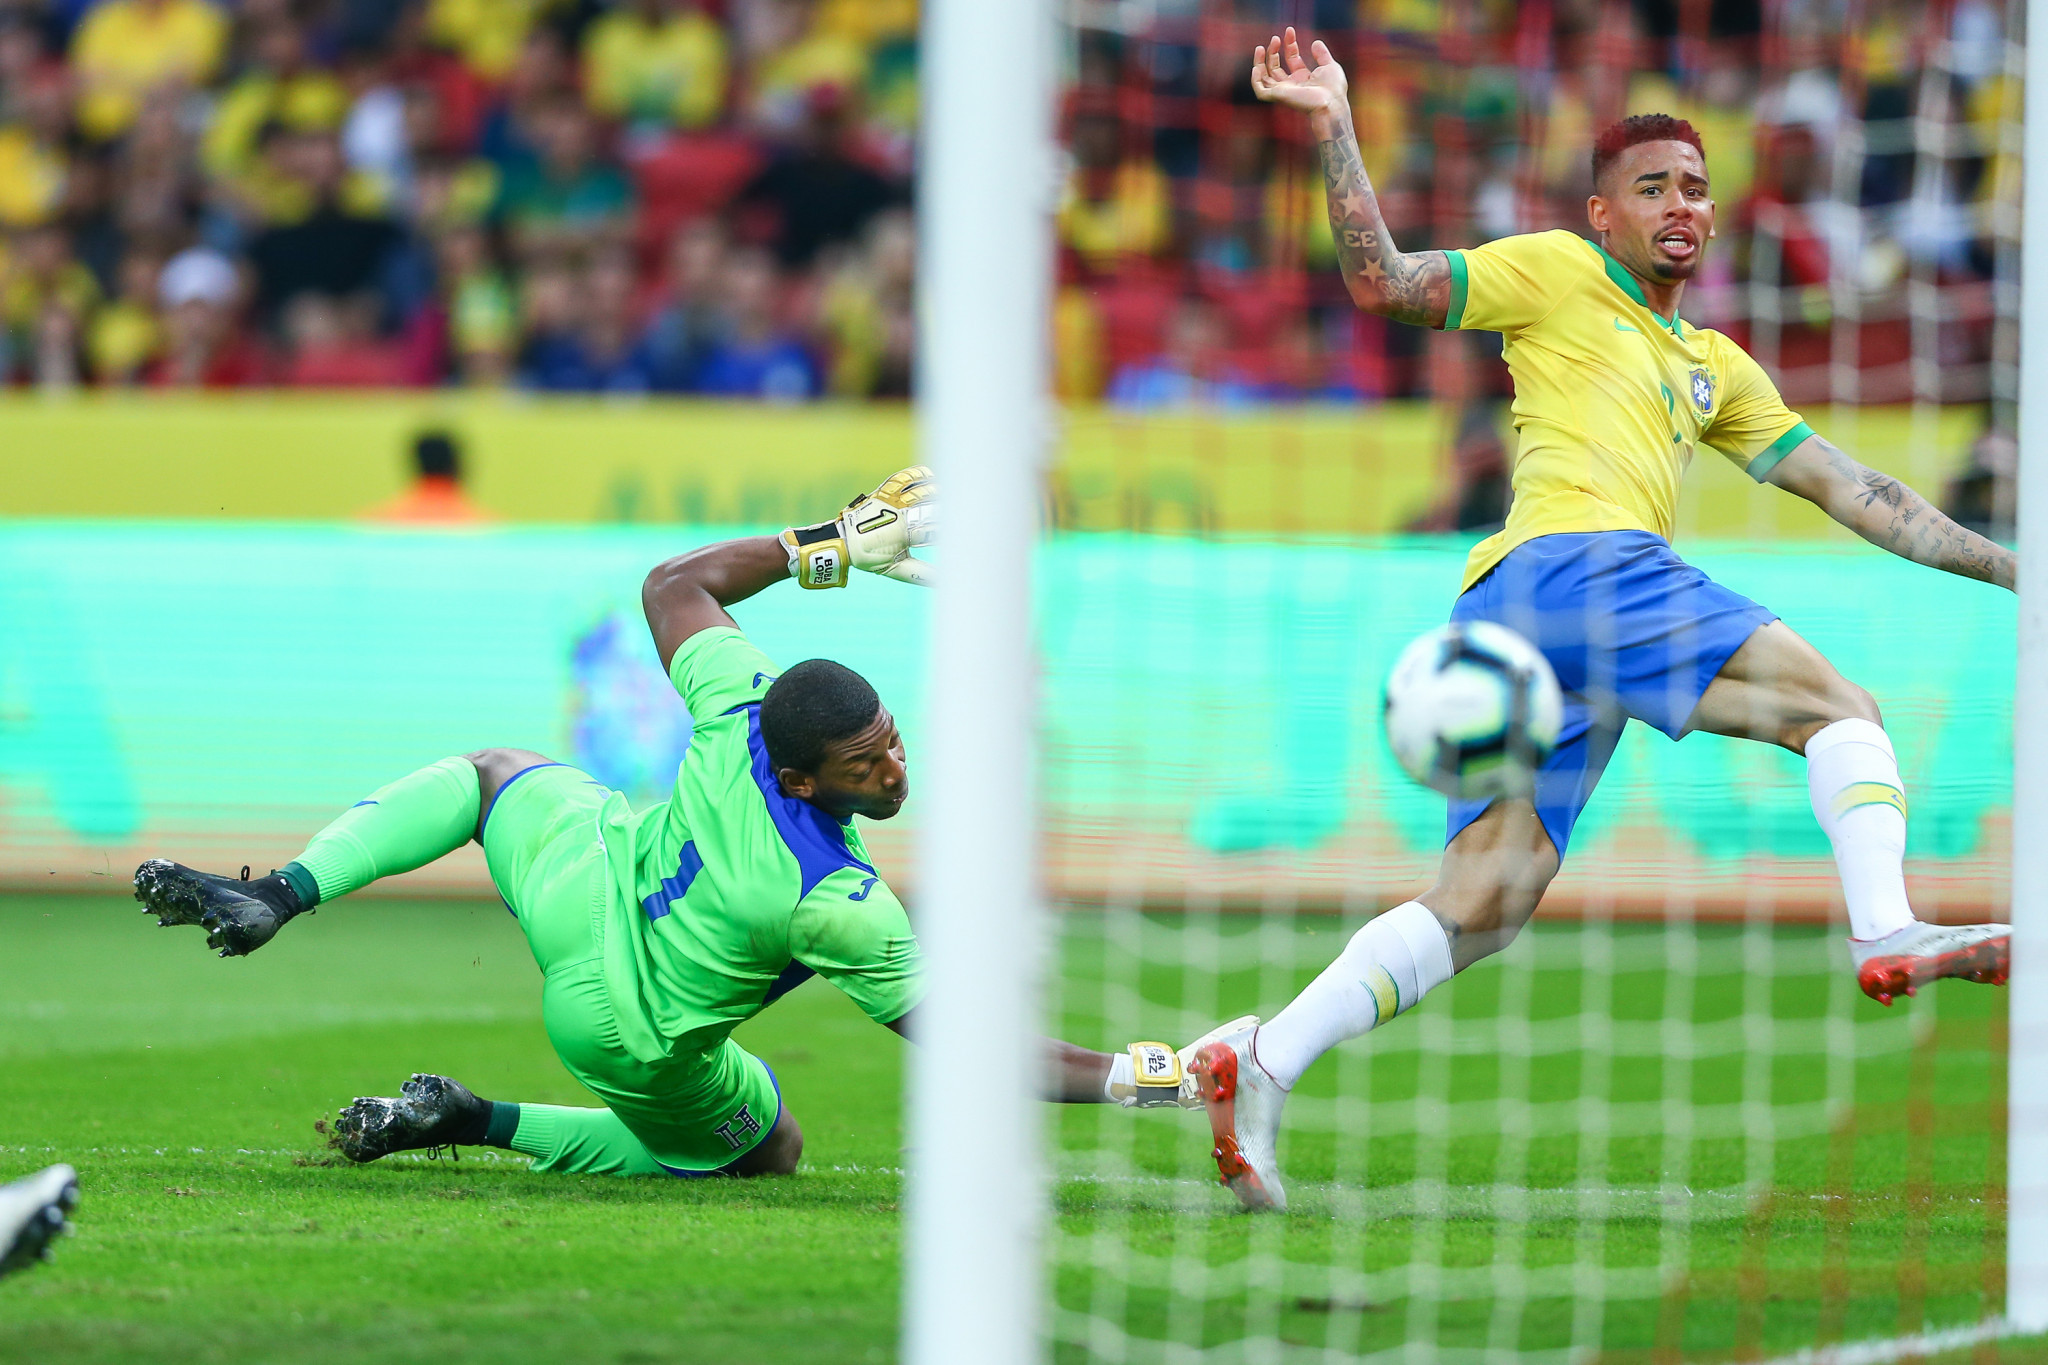 Brazil face immense home pressure as they prepare to host 2019 Copa America